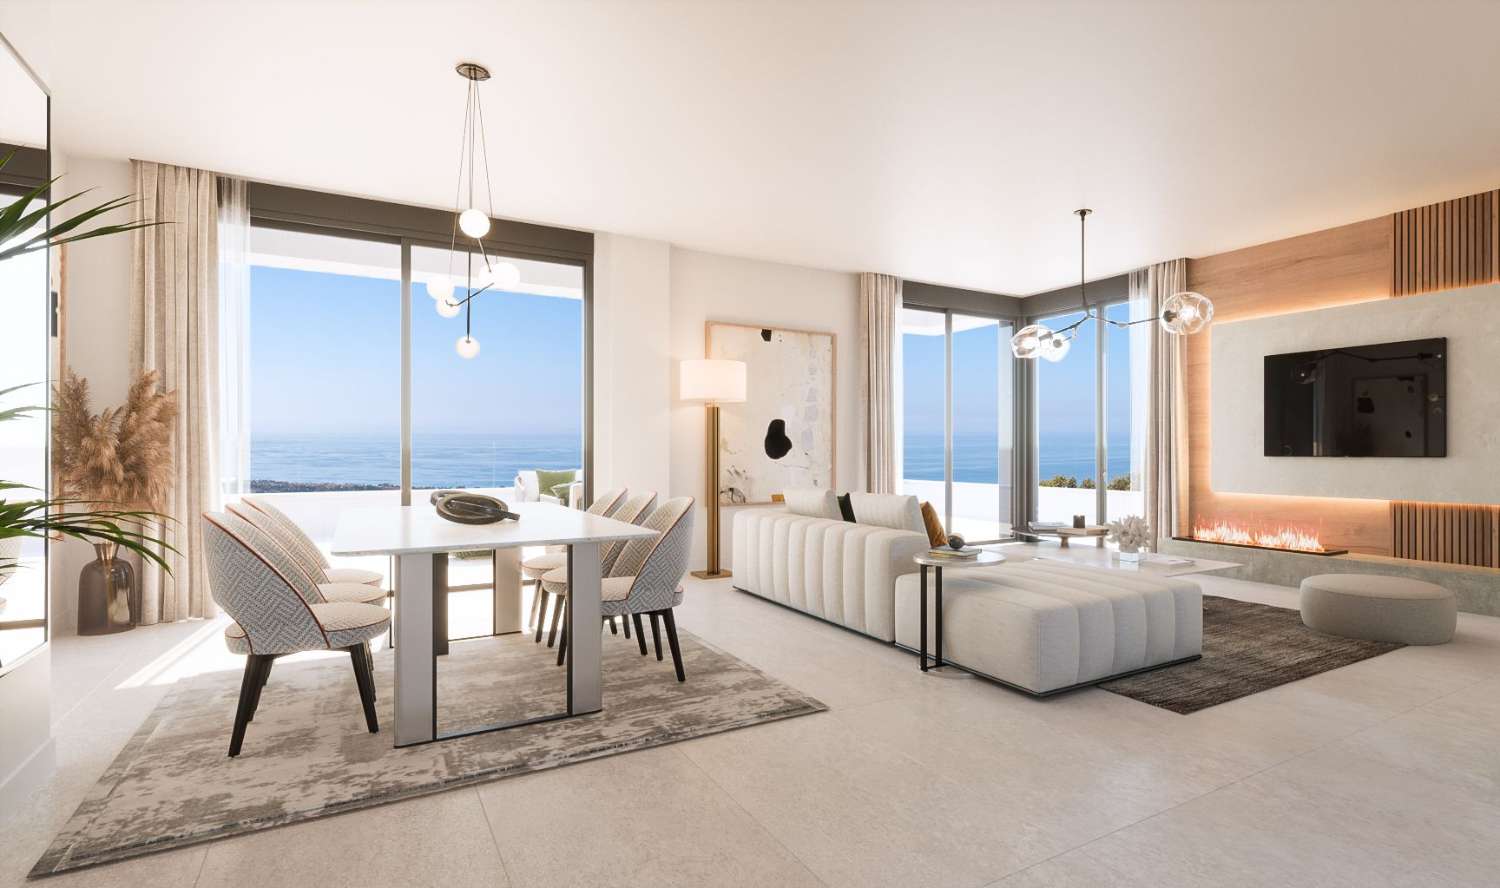 Geräumige und helle Apartments mit Meerblick in Marbella!